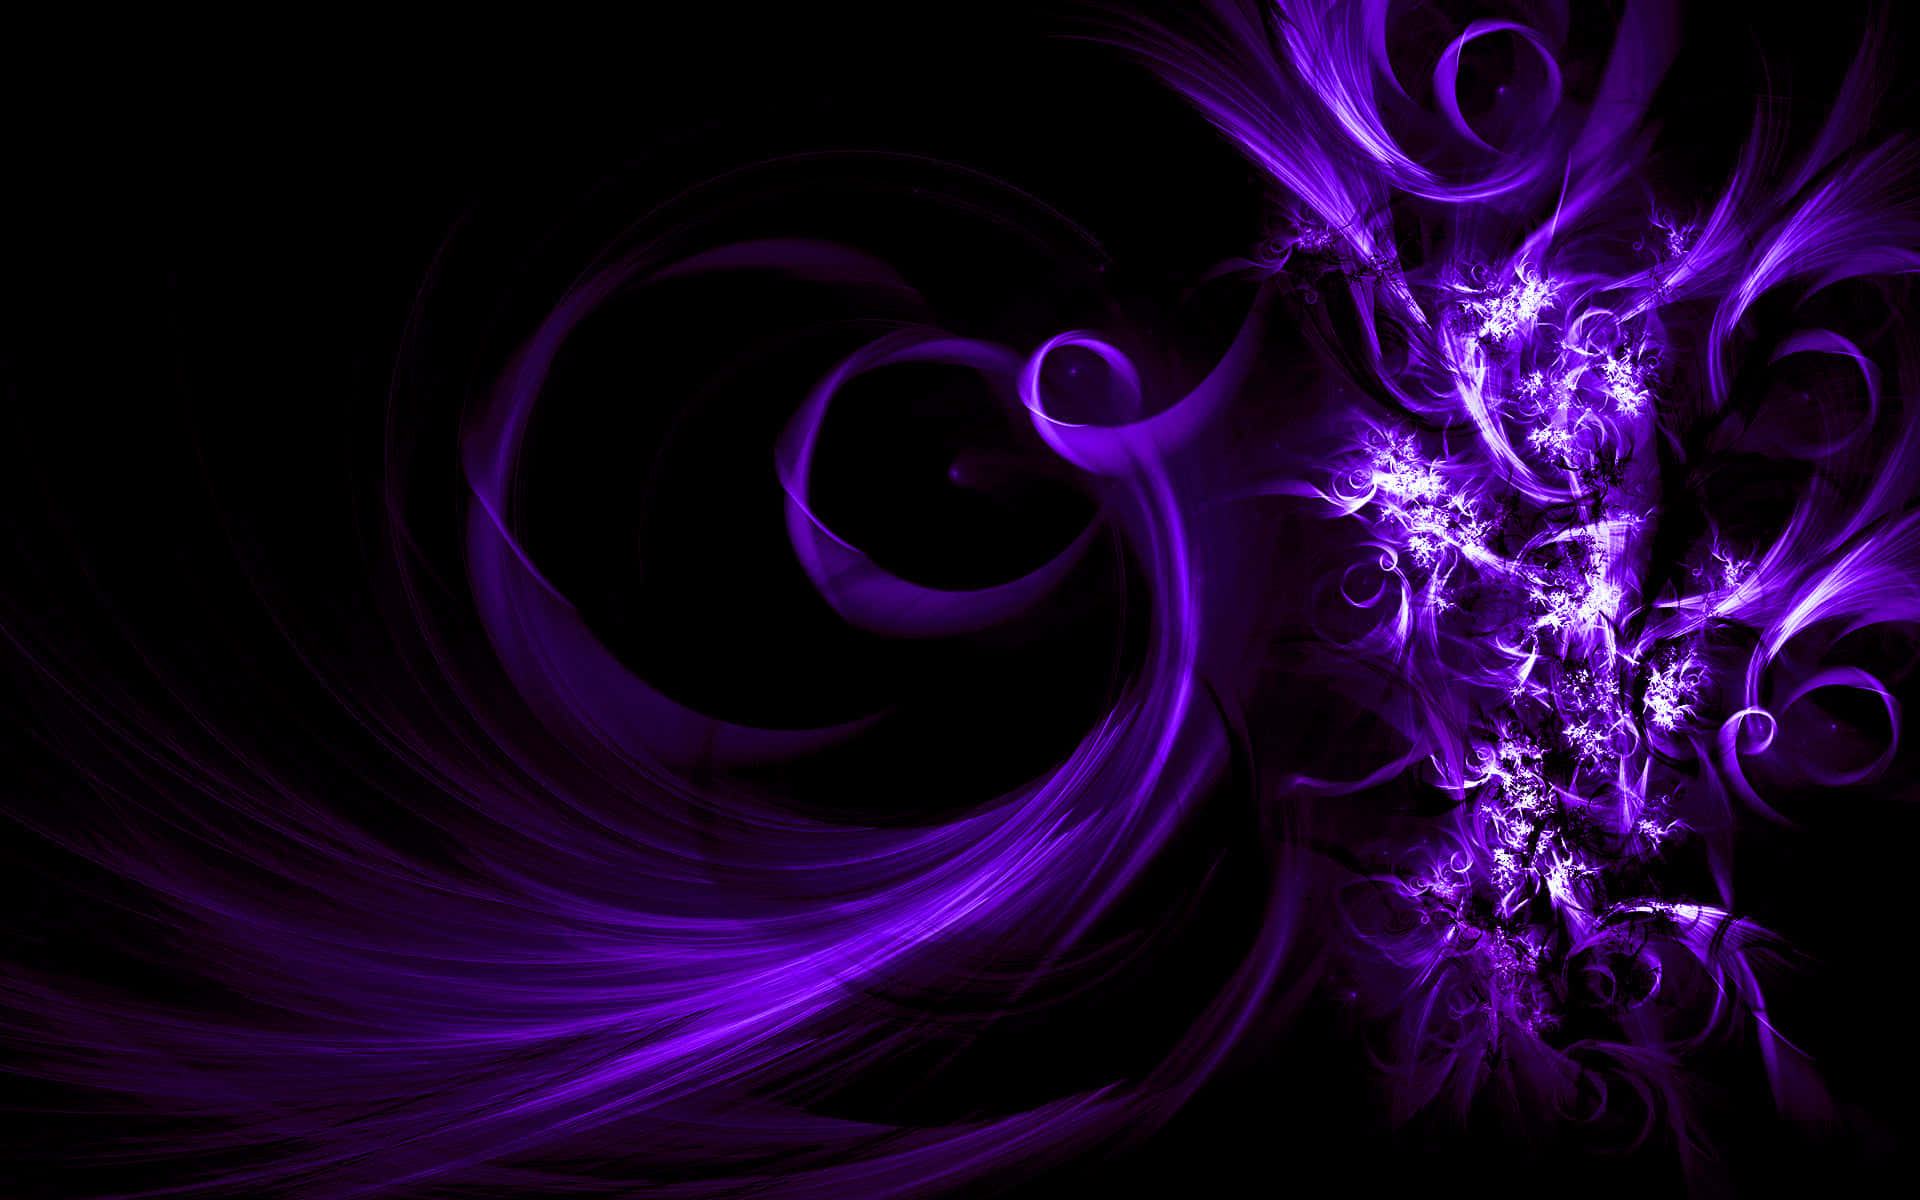 Embrace the dark vibes with dark purple hues